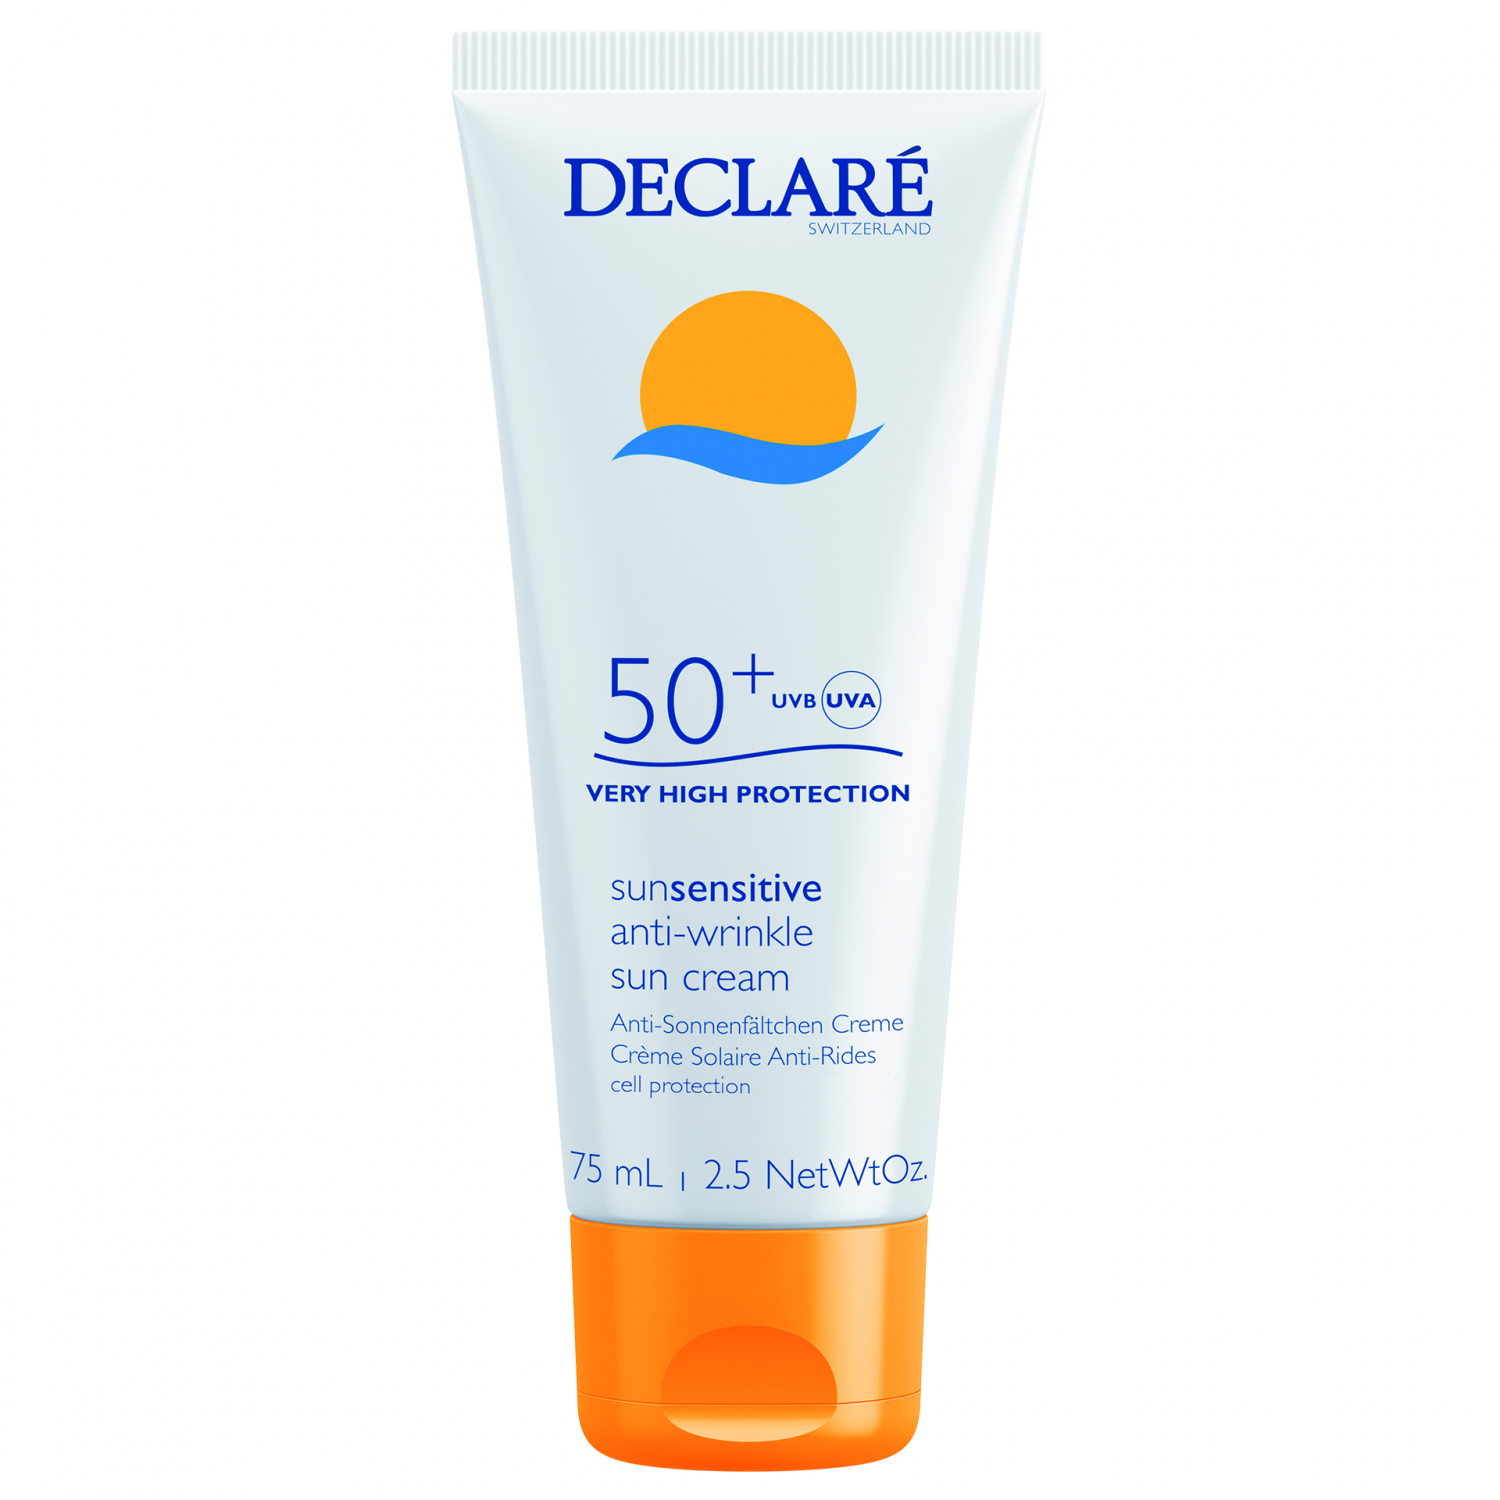 Declare Anti-Wrinkle Sun Cream SPF50+ 75ml - интернет-магазин профессиональной косметики Spadream, изображение 30789